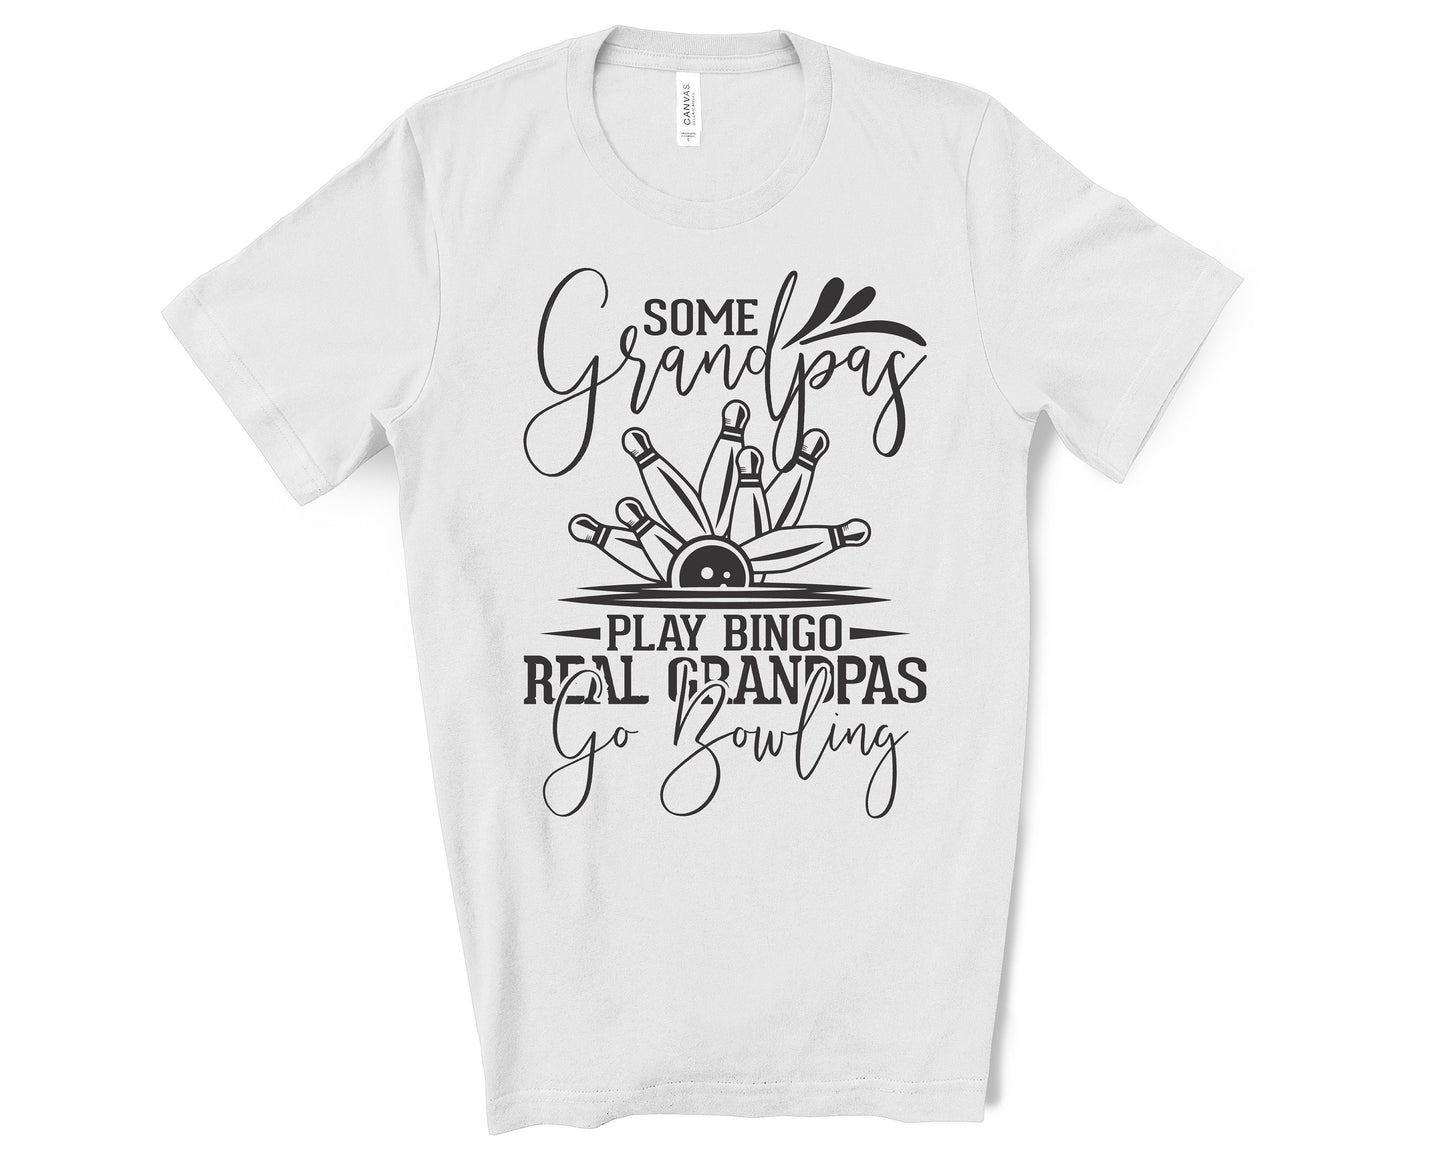 Bowling Grandpa T-Shirt - Father's Day Shirt - Grandpa Shirt - Gifts for Dad - Grandpa Birthday Gift - Bowling Shirt - Gift for a Bowler